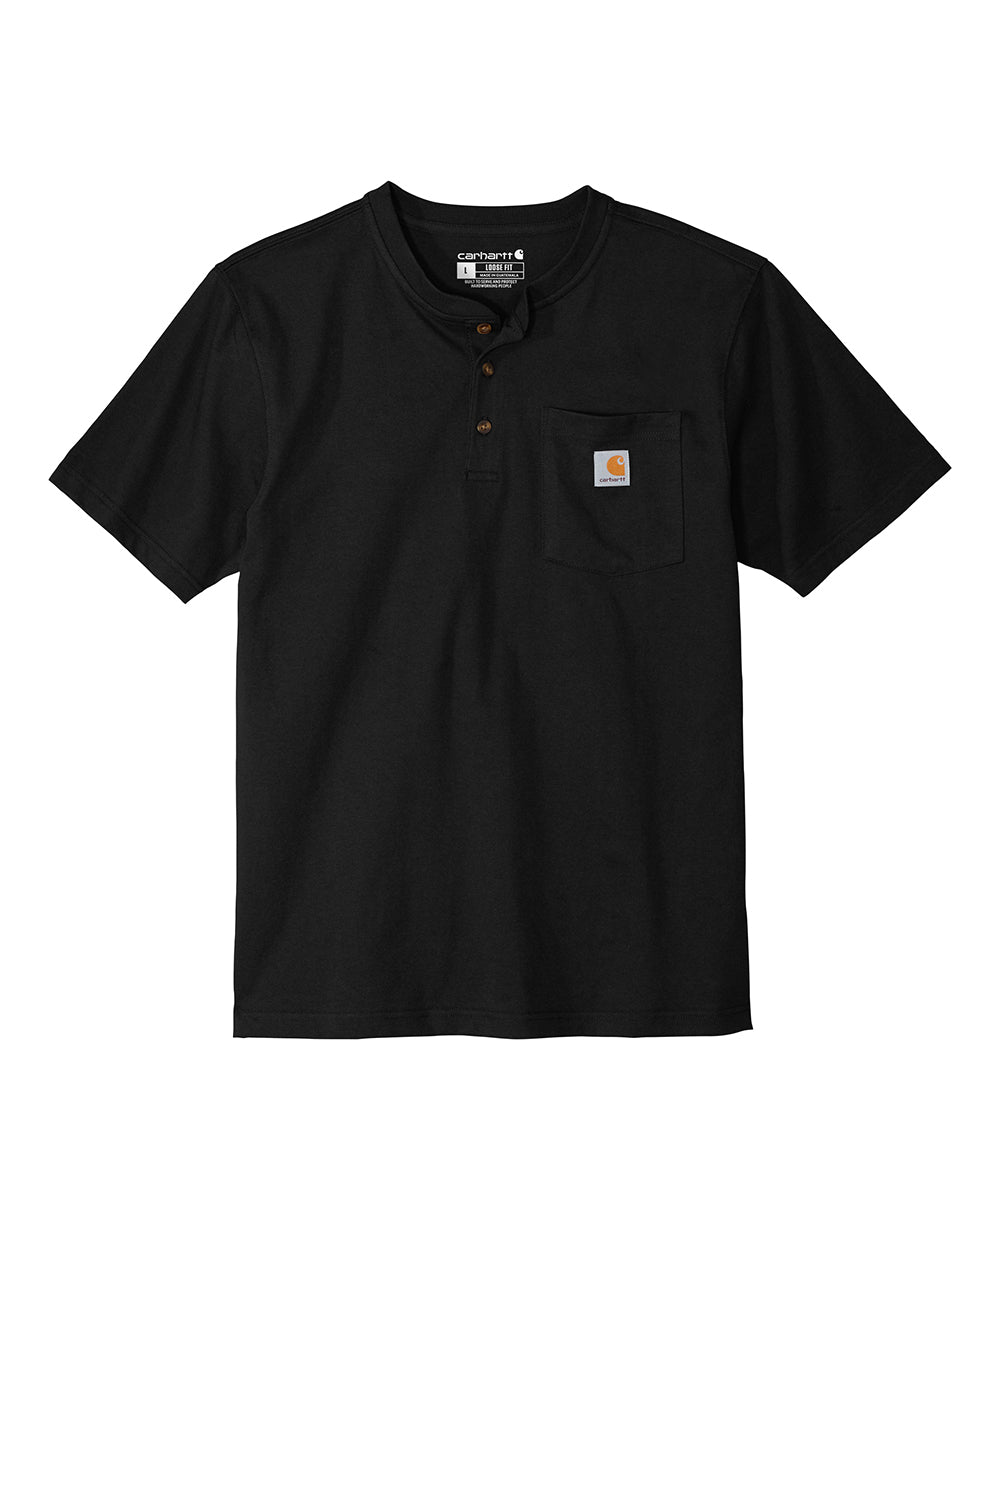 Carhartt CTK84 Mens Short Sleeve Henley T-Shirt w/ Pocket Black Flat Front